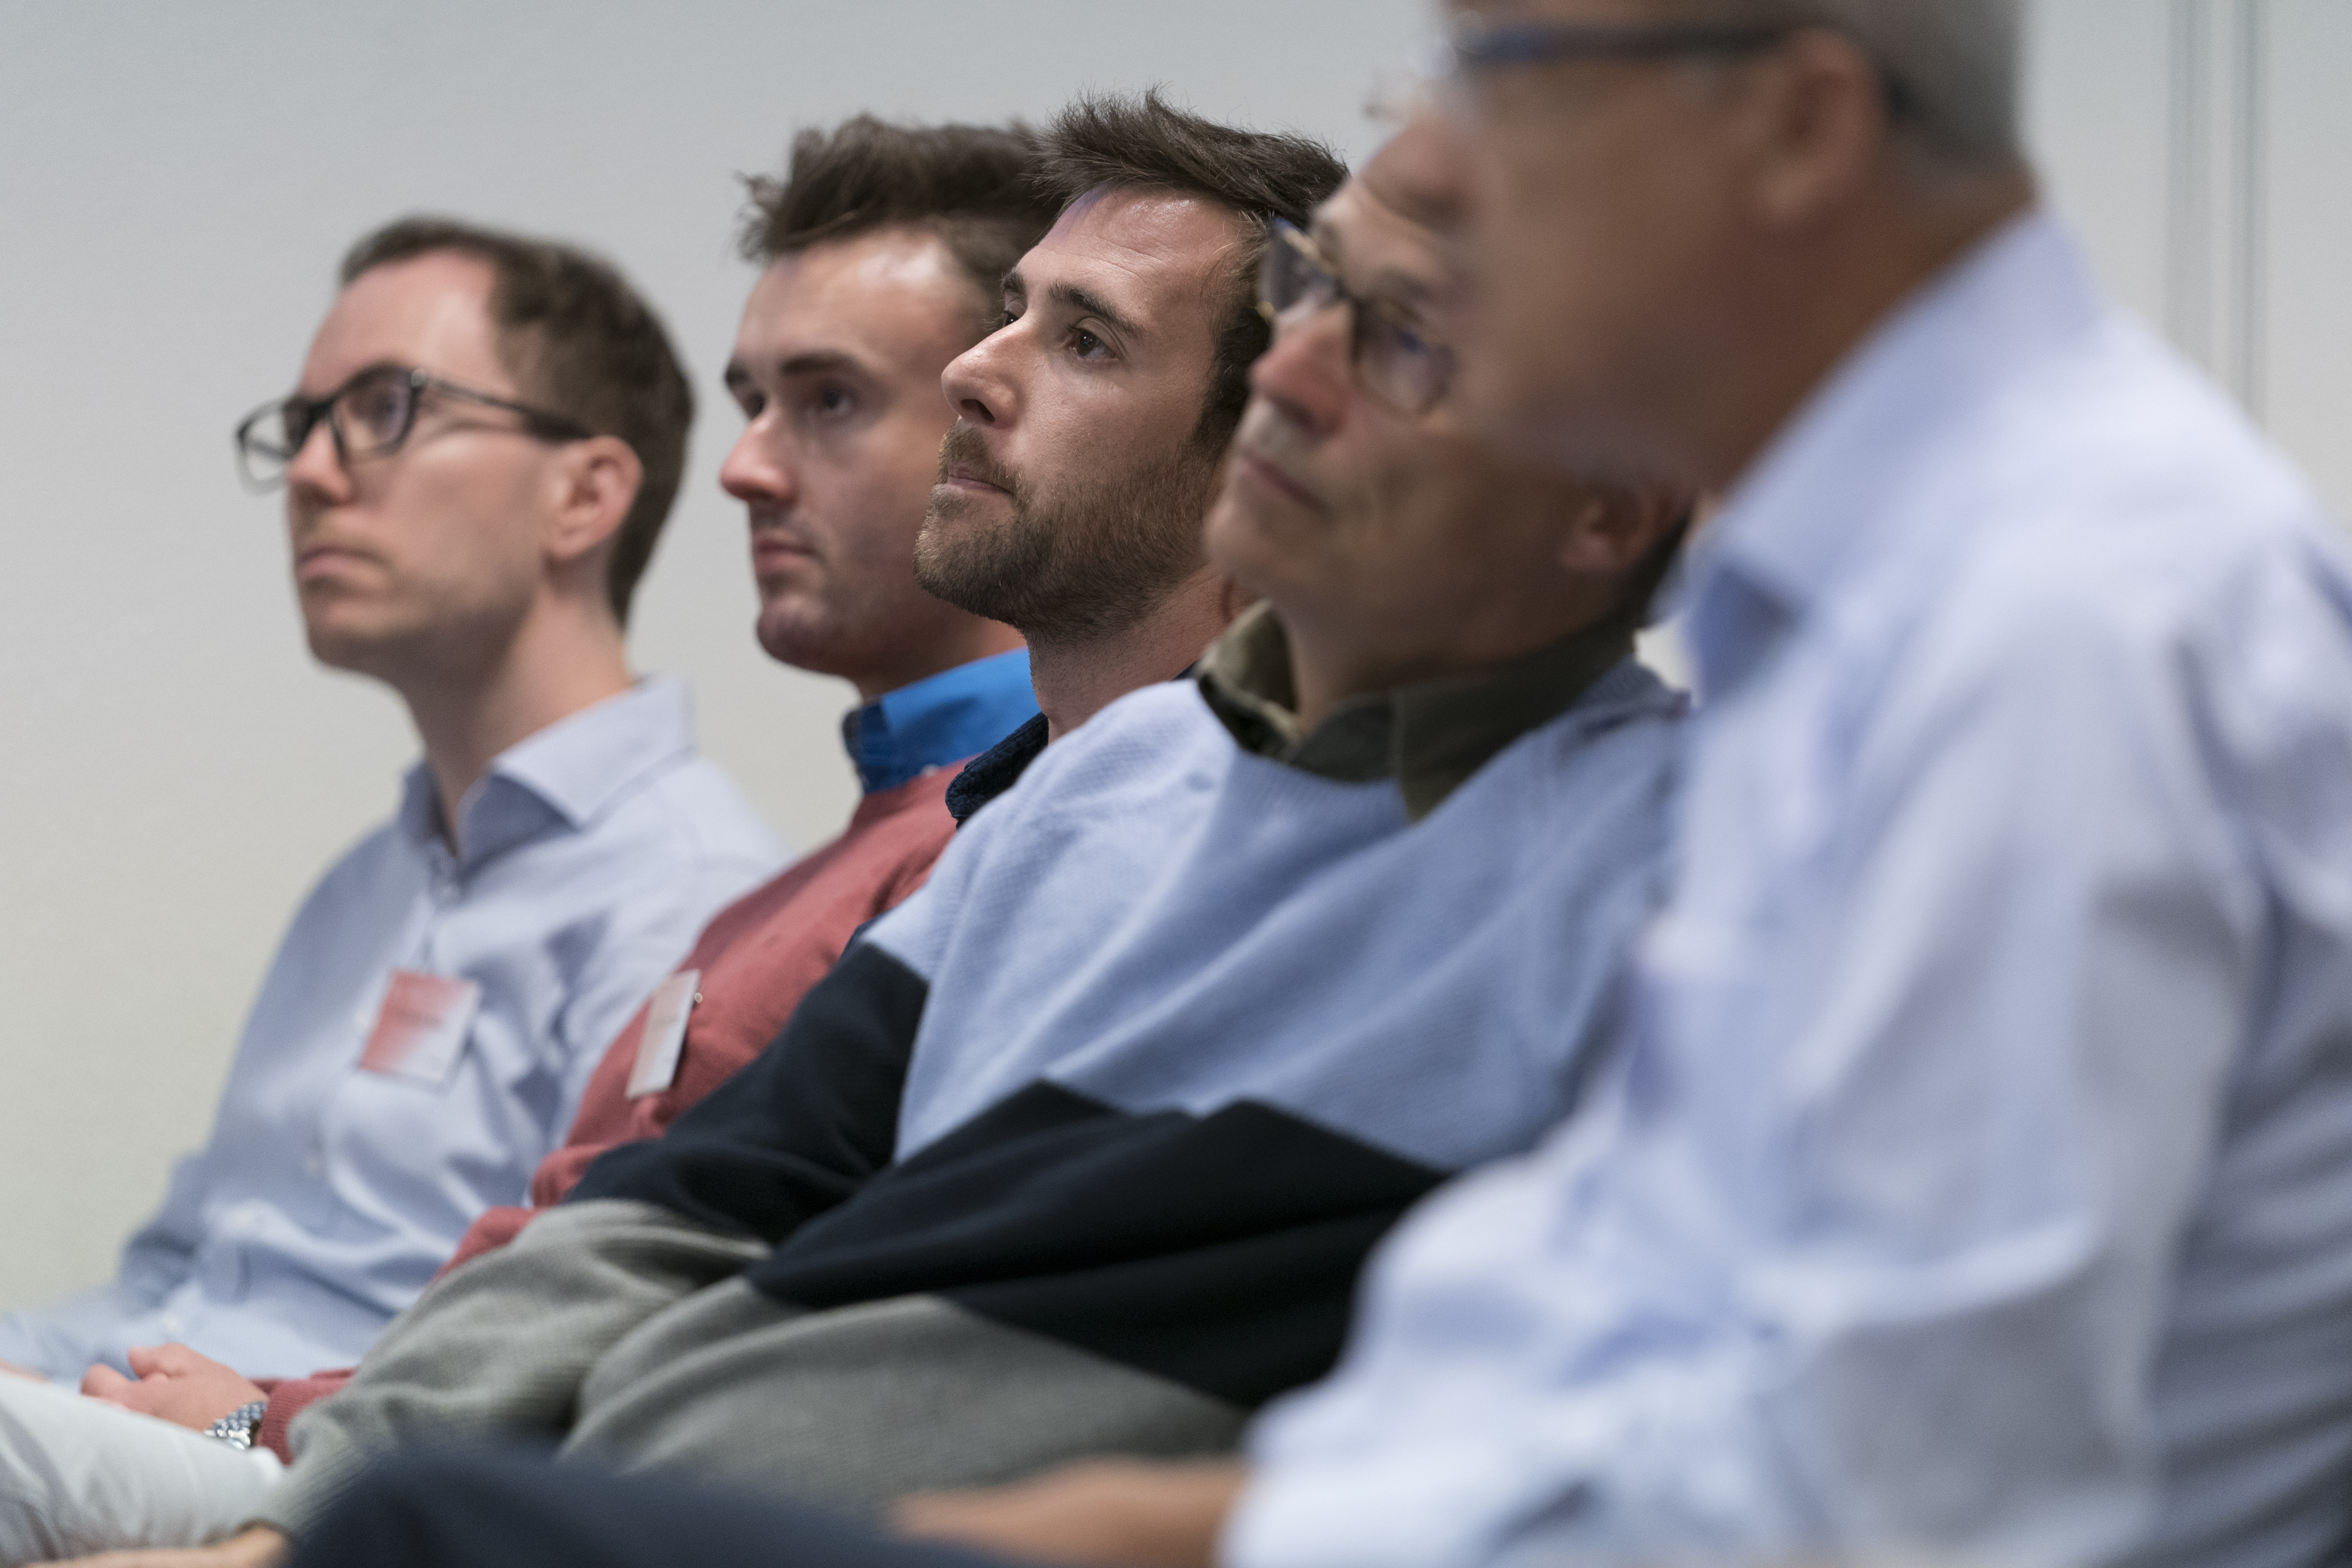 Attendees listen to a presentation (Photo: Reyer Boxem)